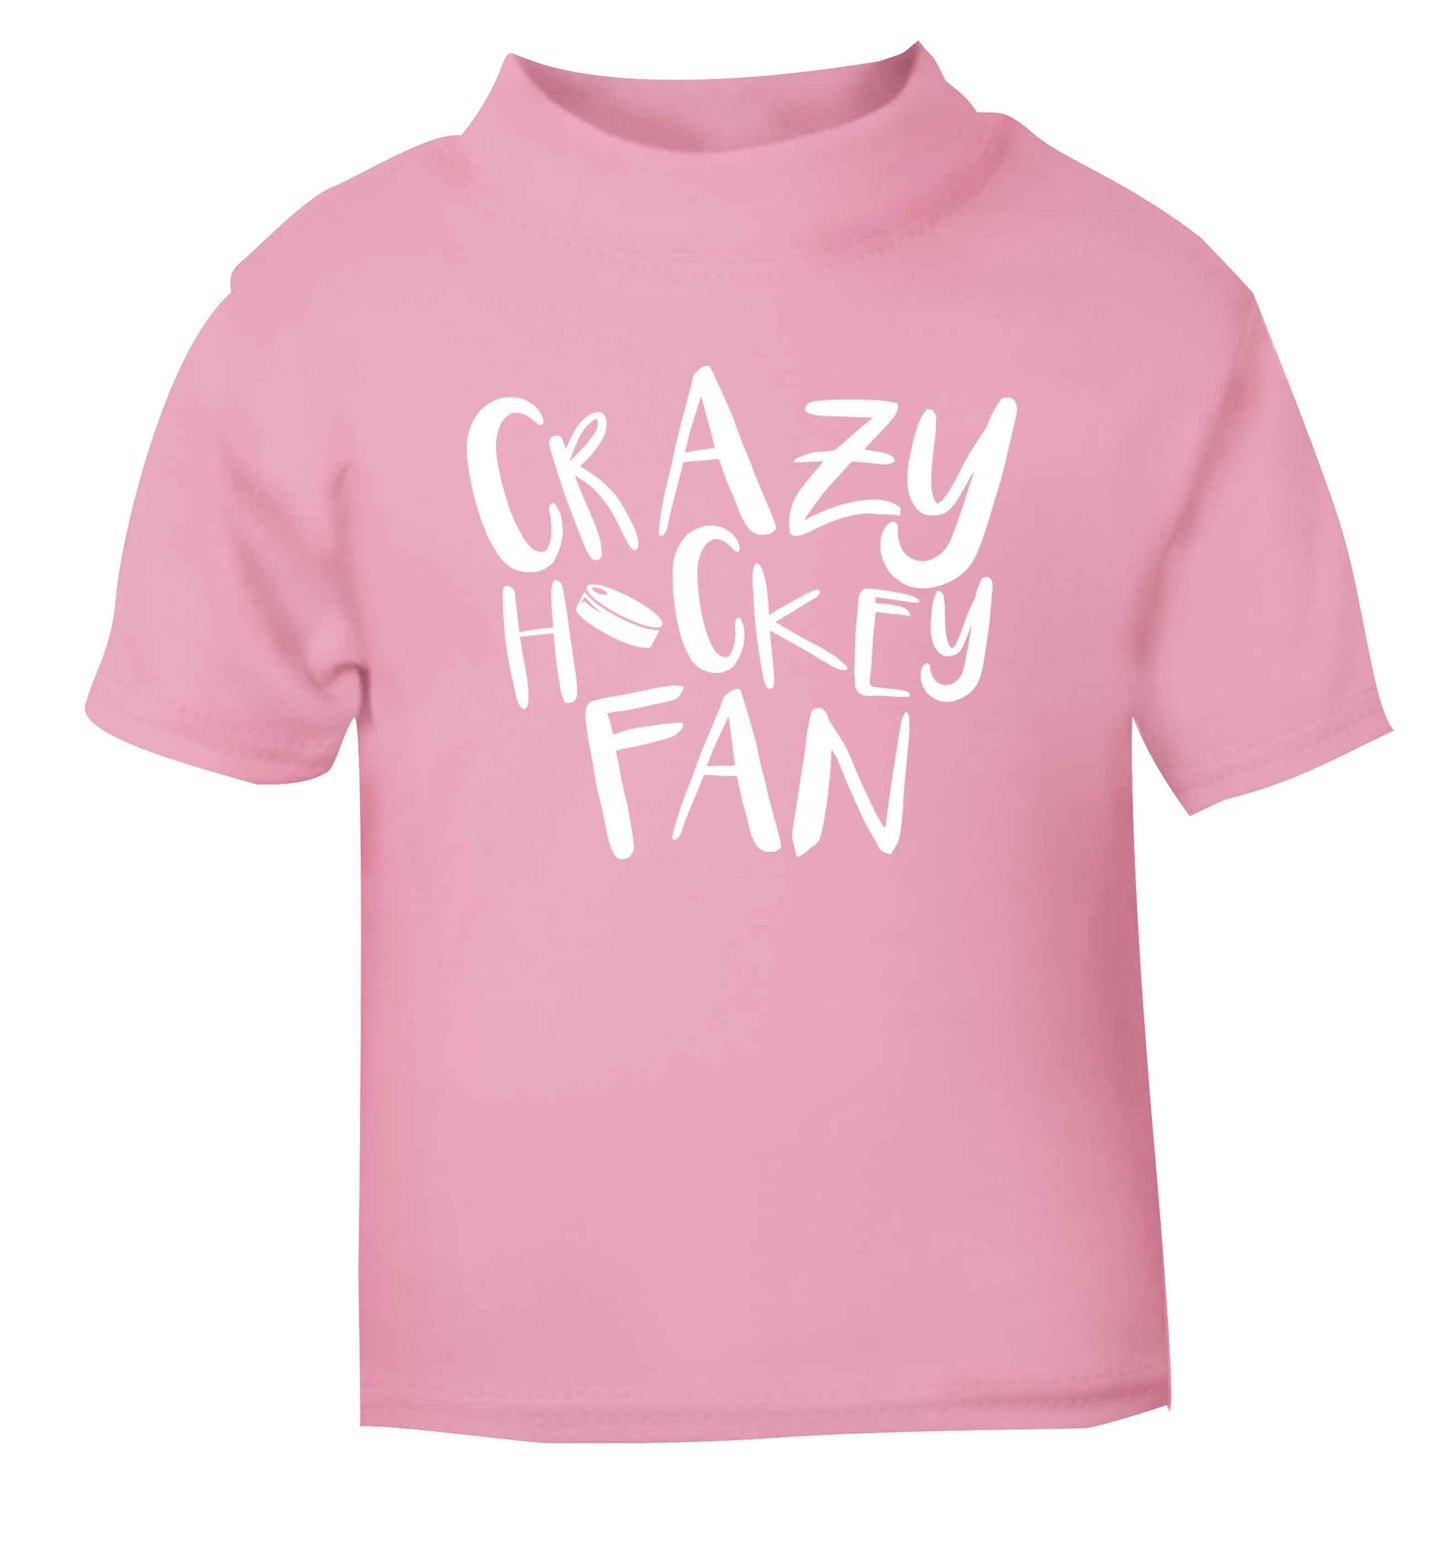 Crazy hockey fan light pink Baby Toddler Tshirt 2 Years